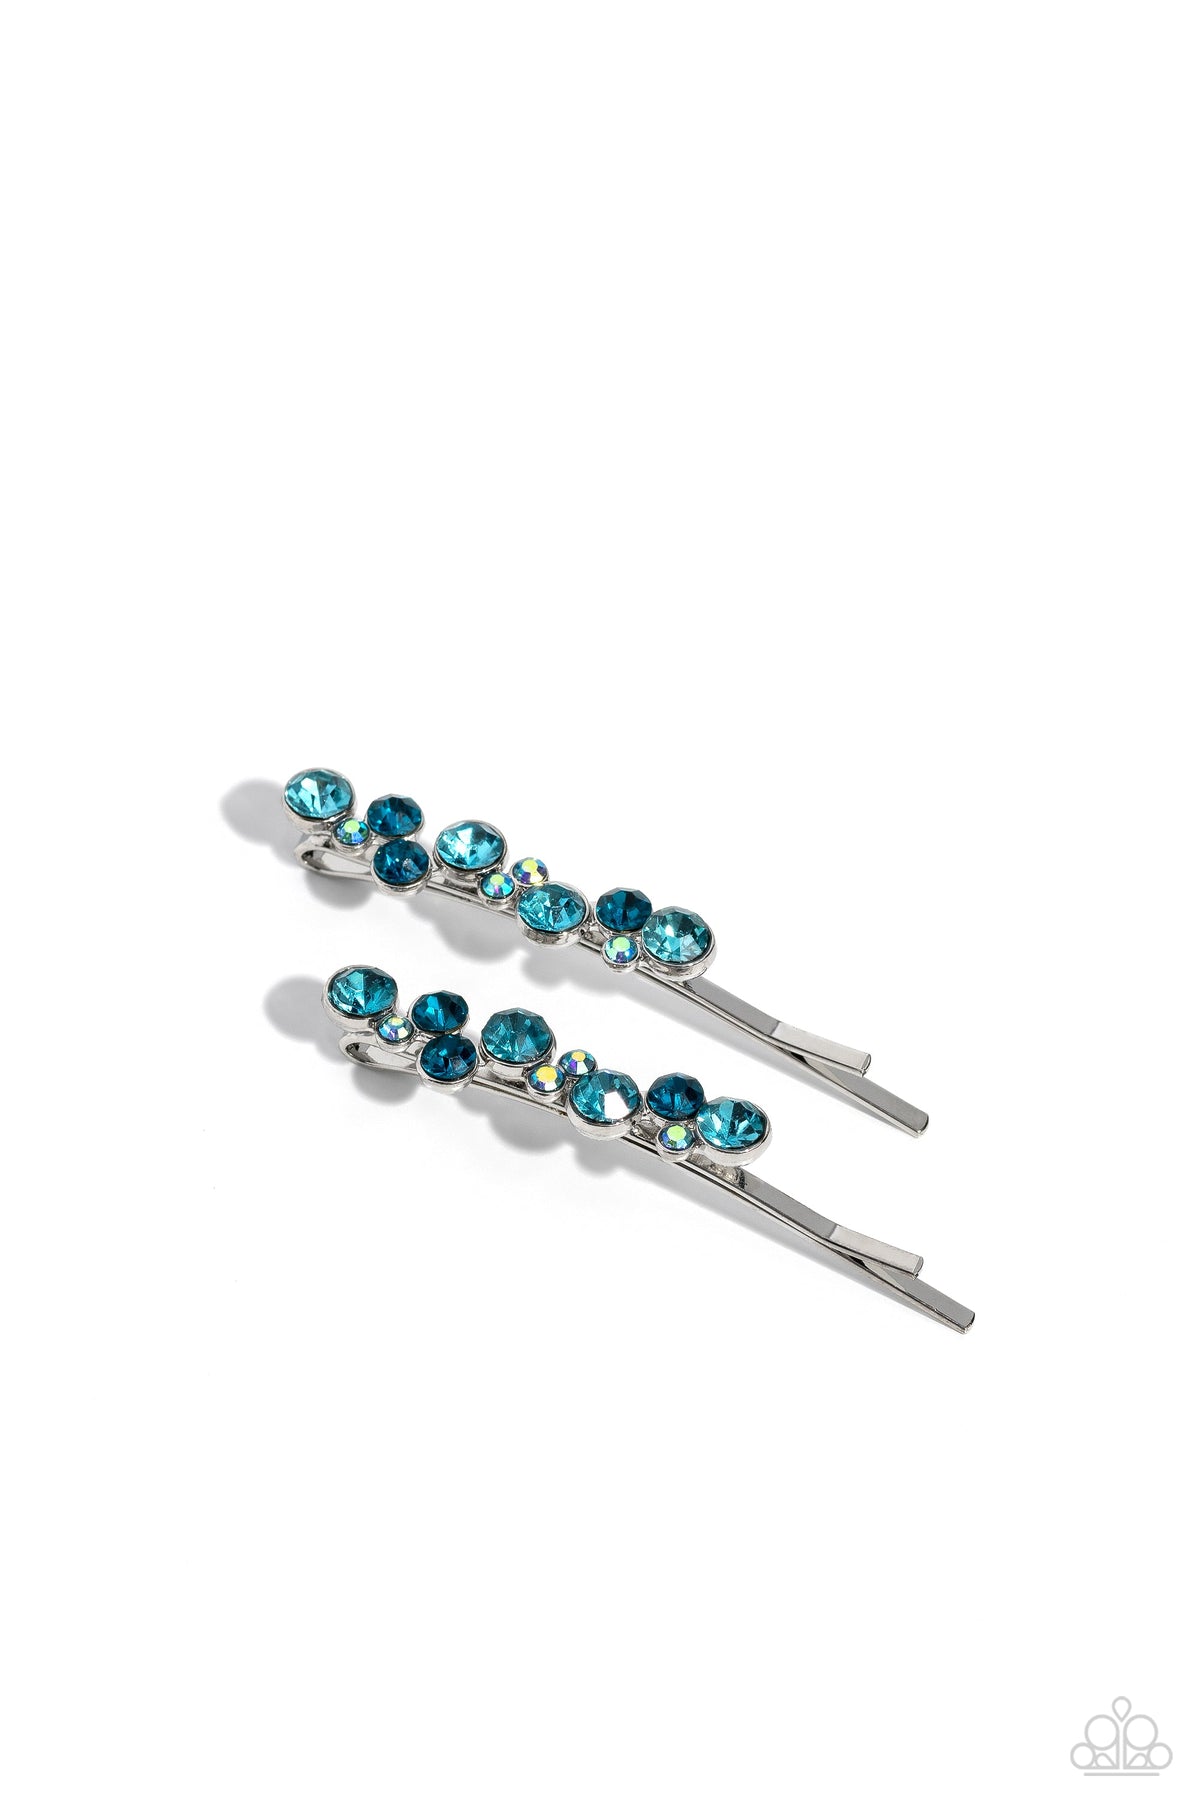 Bubbly Ballroom Blue Rhinestone Hair Pins - Paparazzi Accessories-on model - CarasShop.com - $5 Jewelry by Cara Jewels